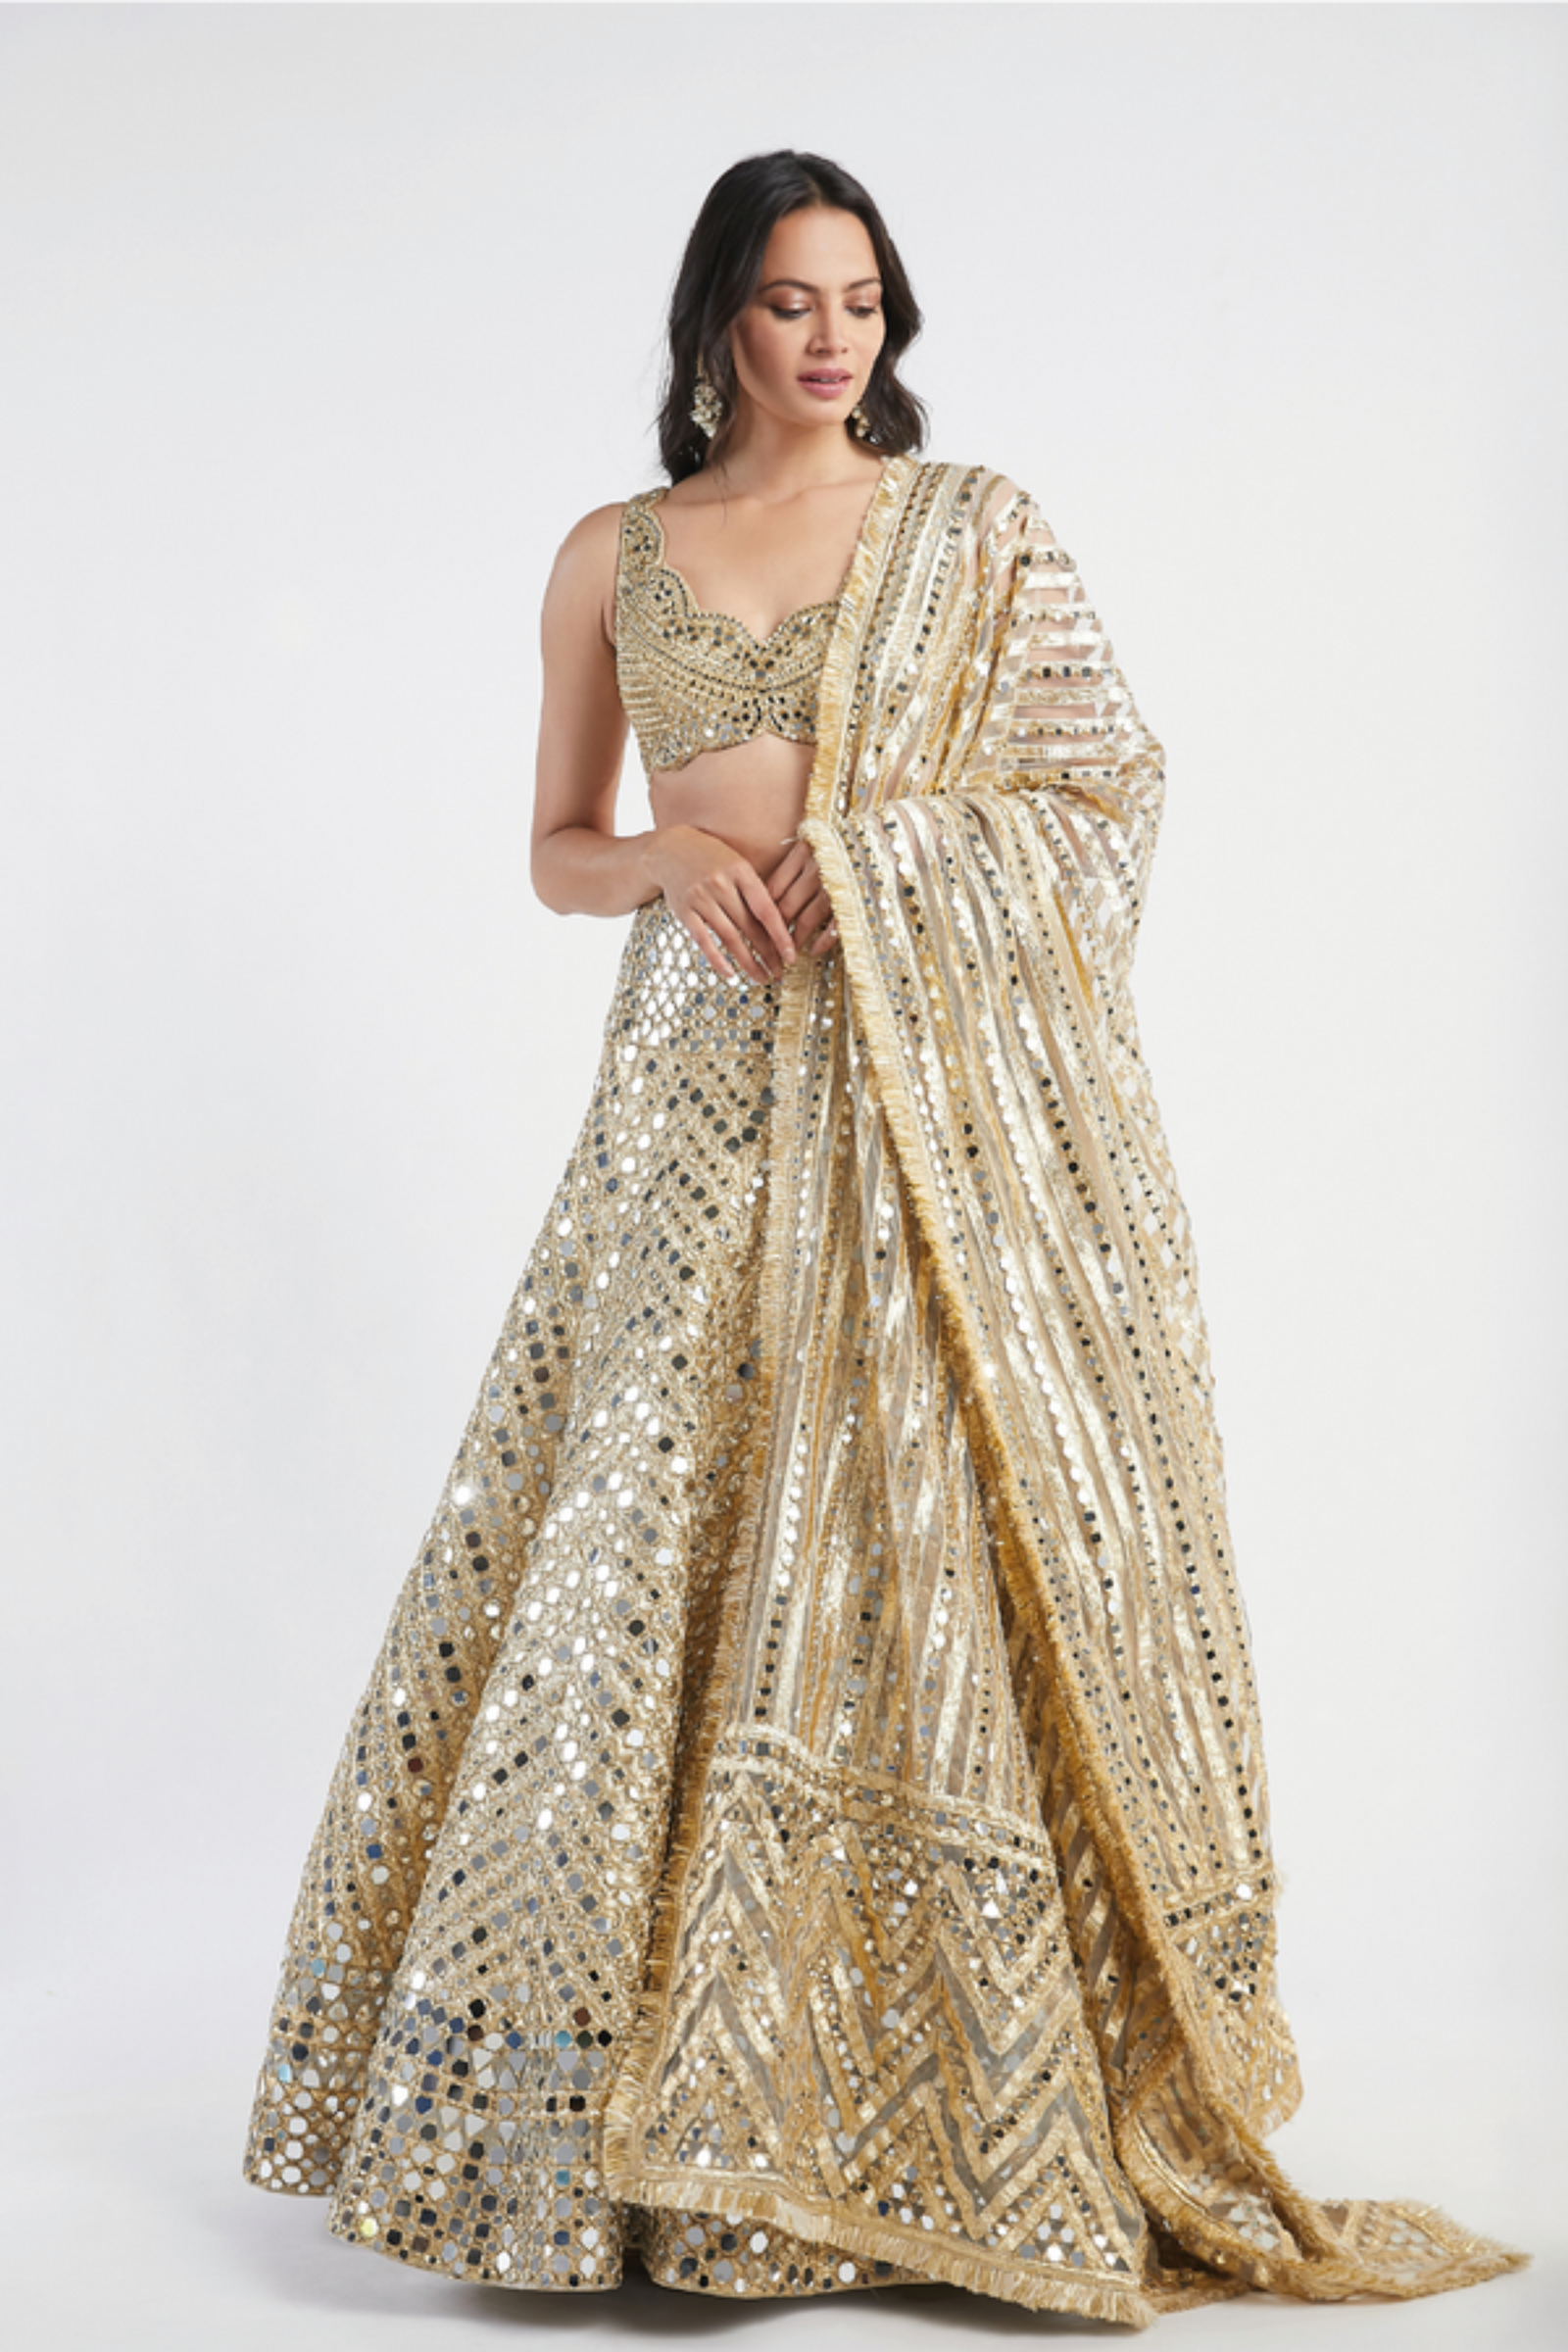 Top 7 Designer Lehengas for Wedding Season | by Shivani.kardham96 | Medium